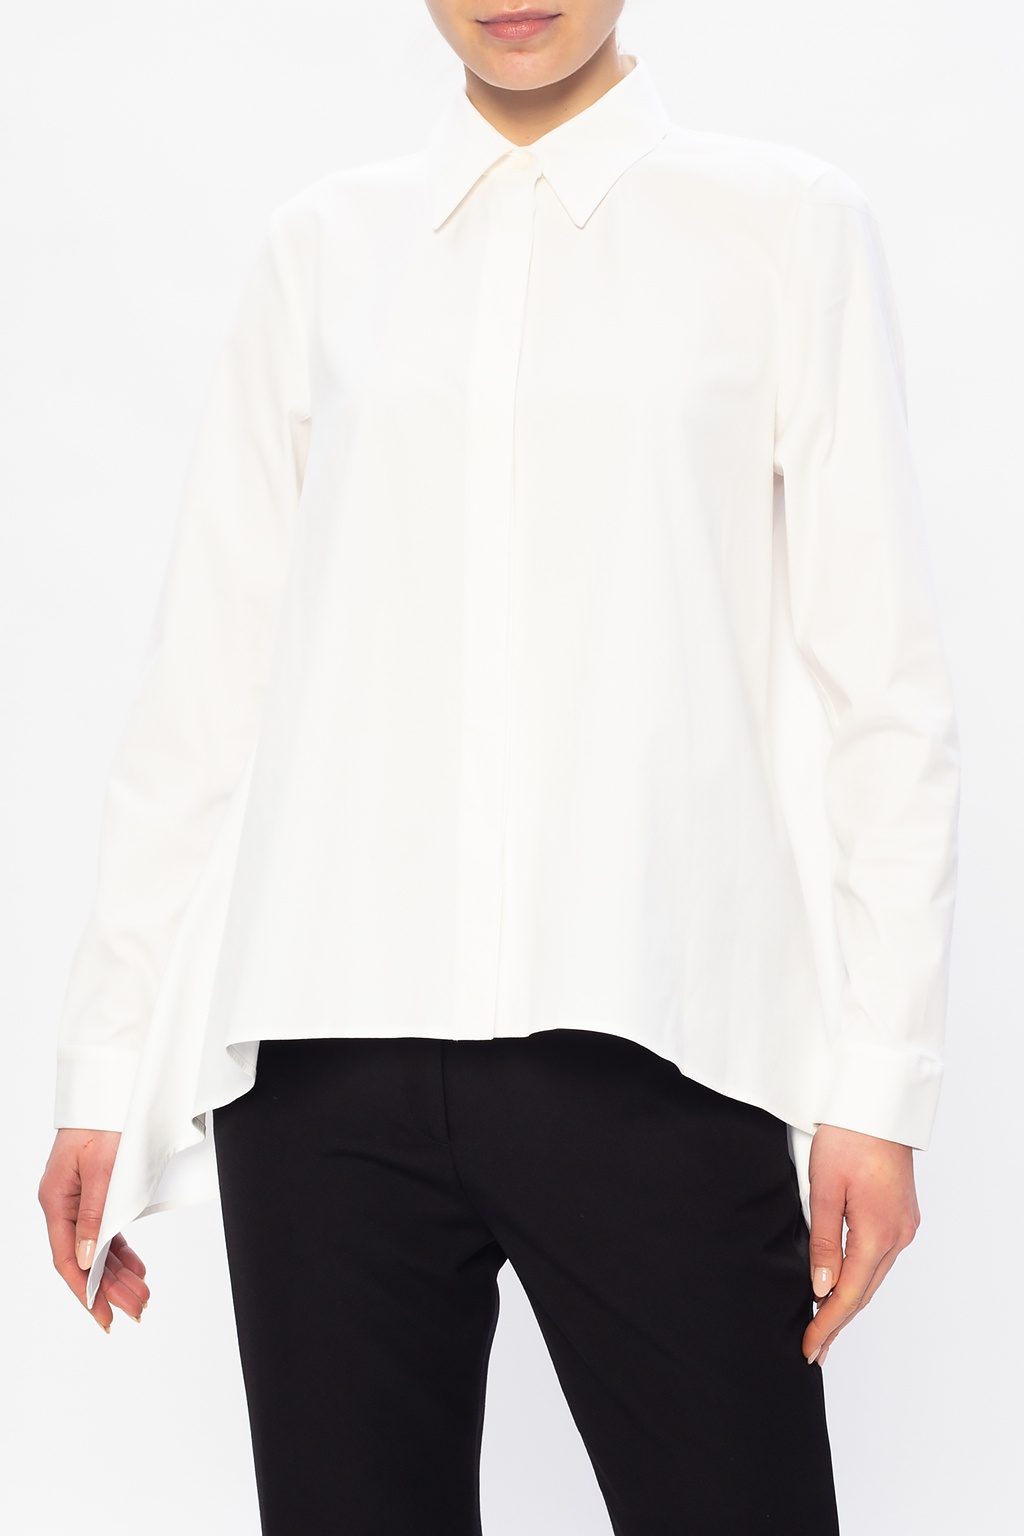 Michael Kors Cotton shirt